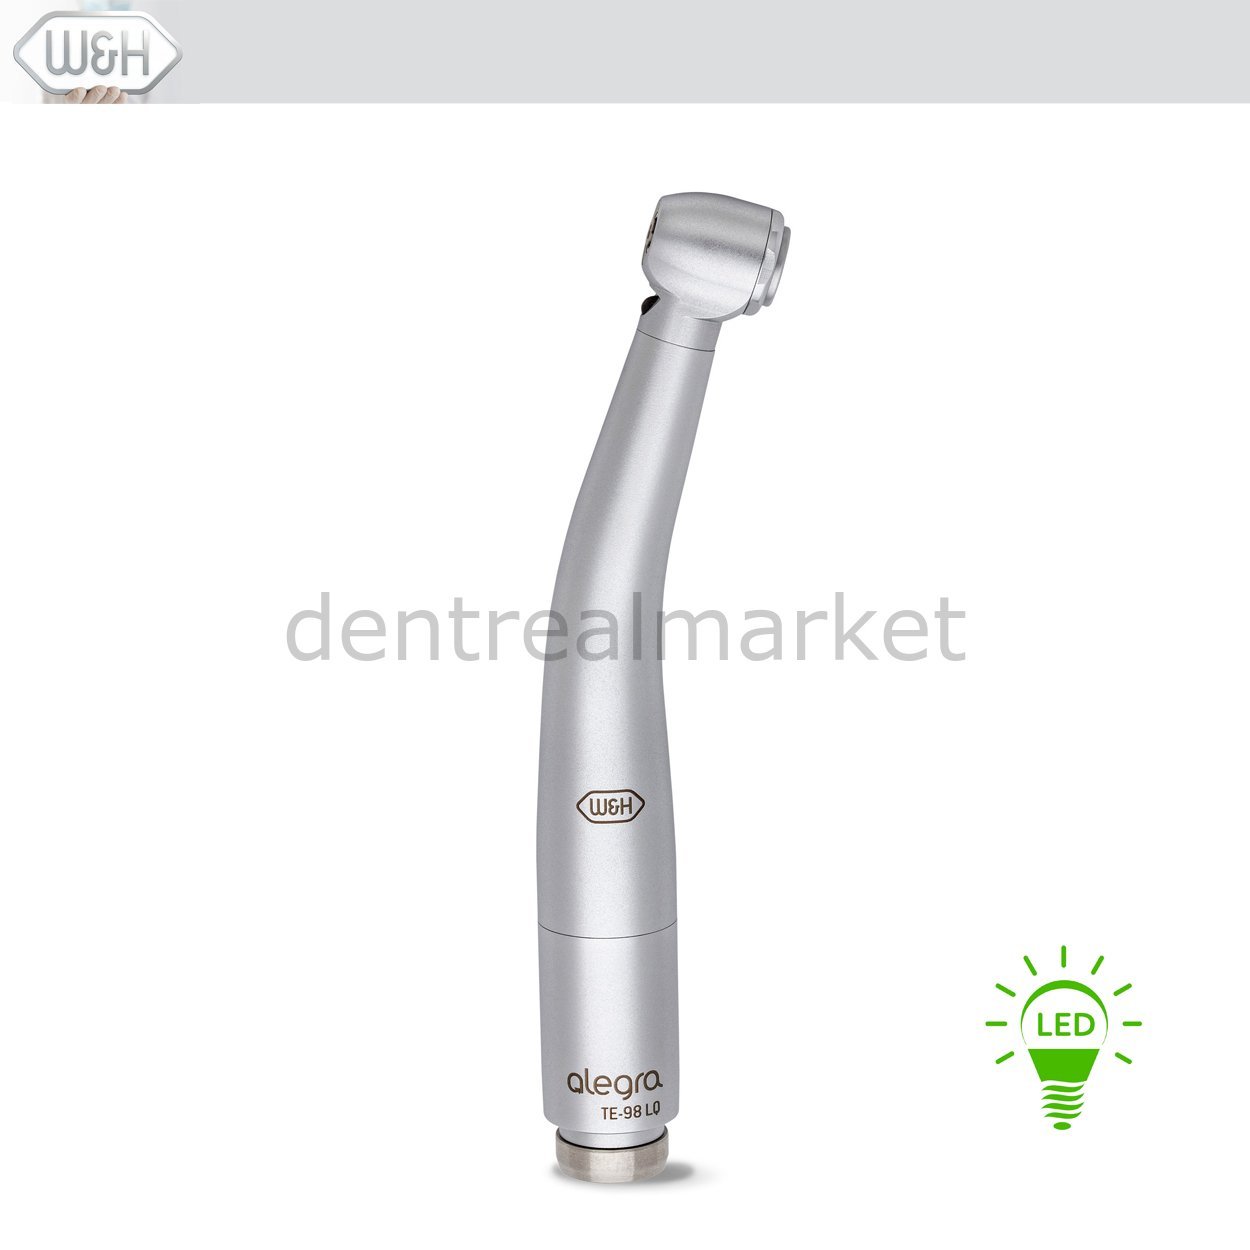 Dentrealmarket | W&H Dental Alegra Türbin Led Işıklı Aeratör - TE-98LQ